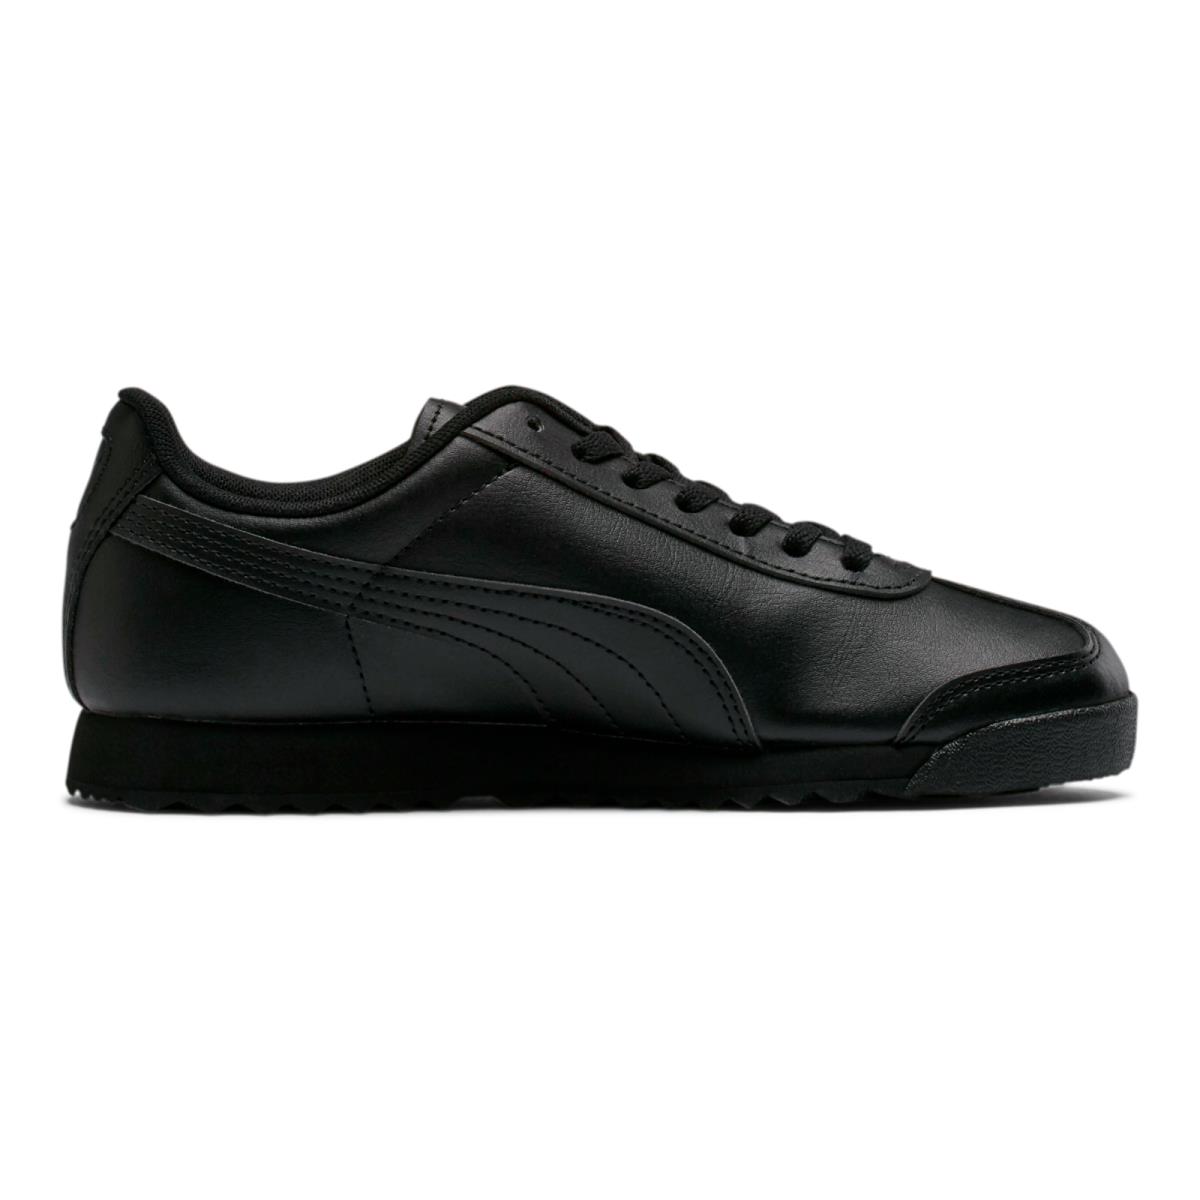 Puma Roma Basic Junior / Grade School Sneaker Black-black 354259-12 - Black